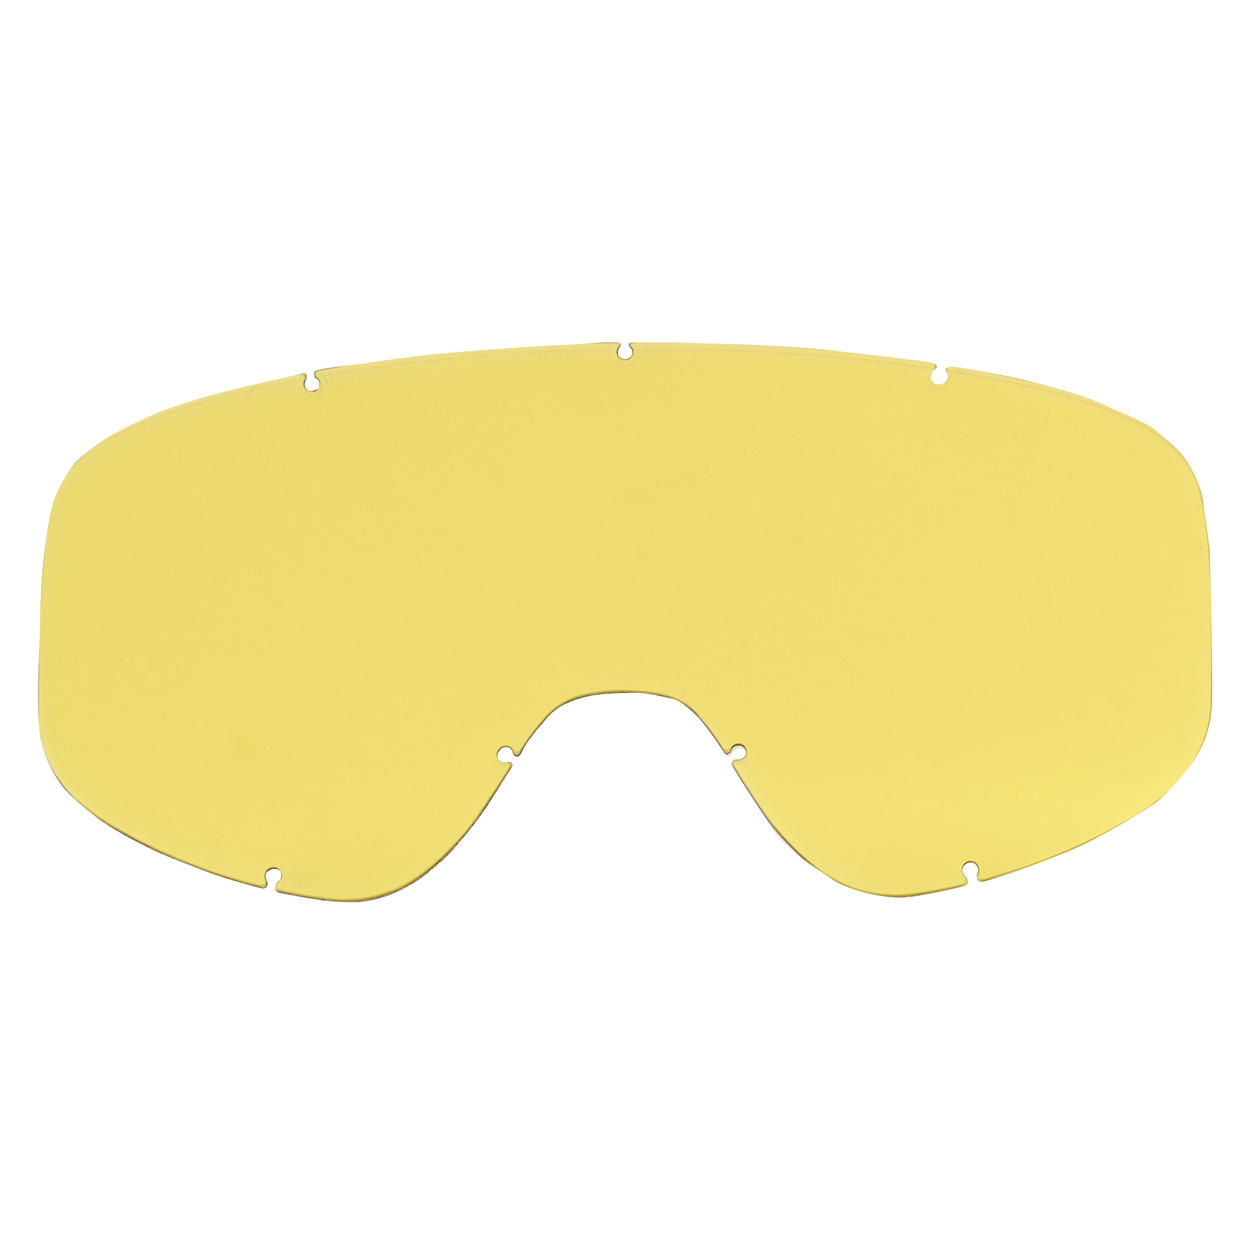 Biltwell Moto 2.0 Lens - Yellow